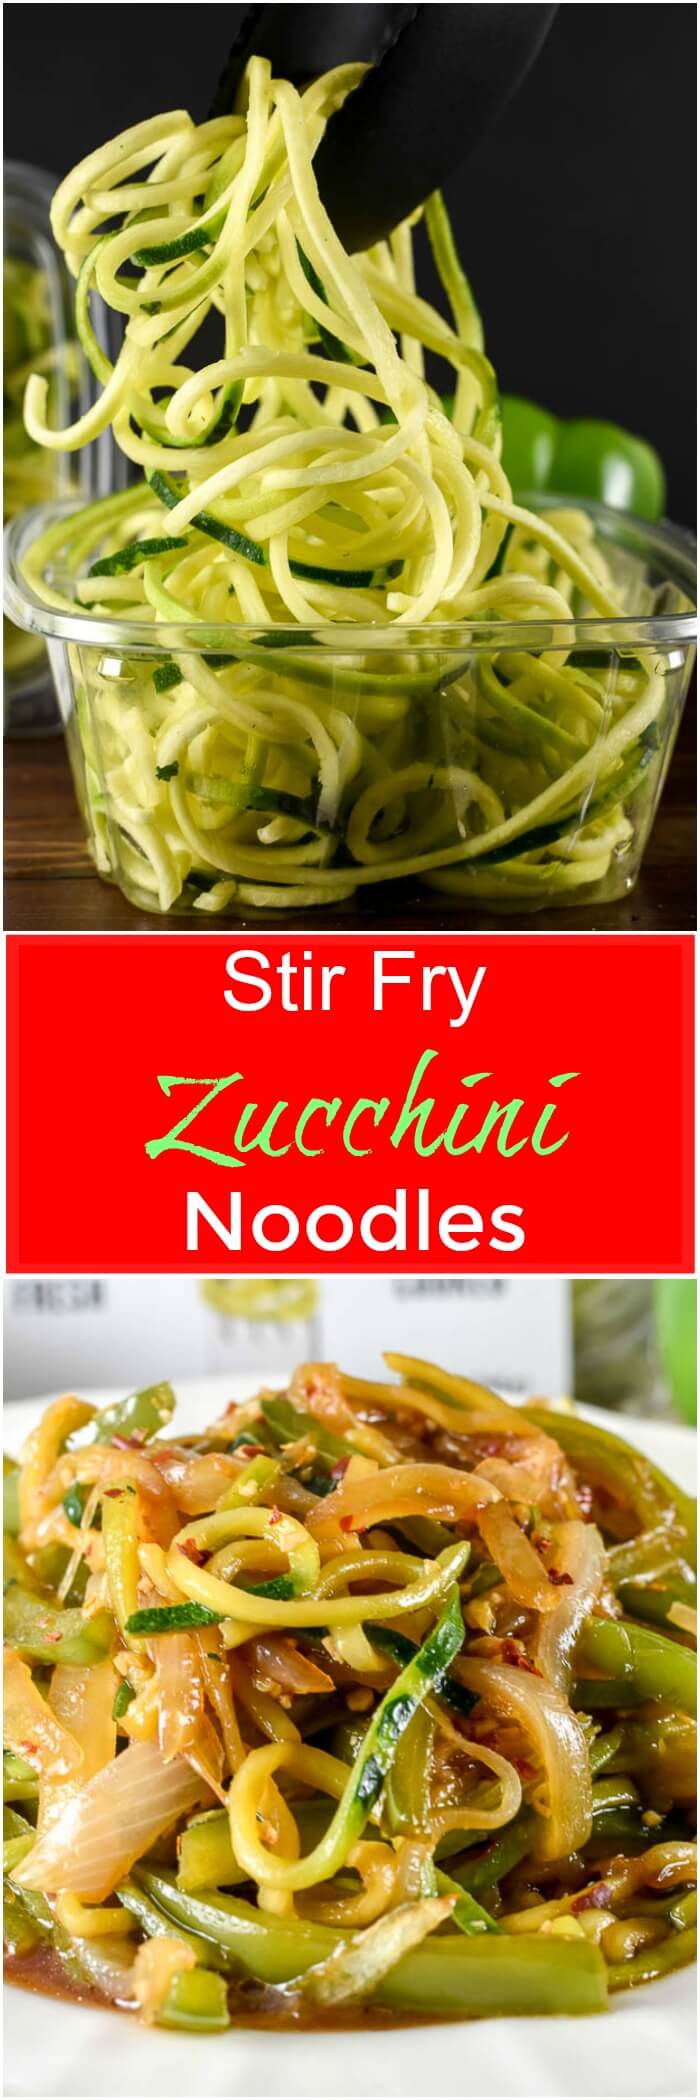 Stir Fry Zucchini noodles